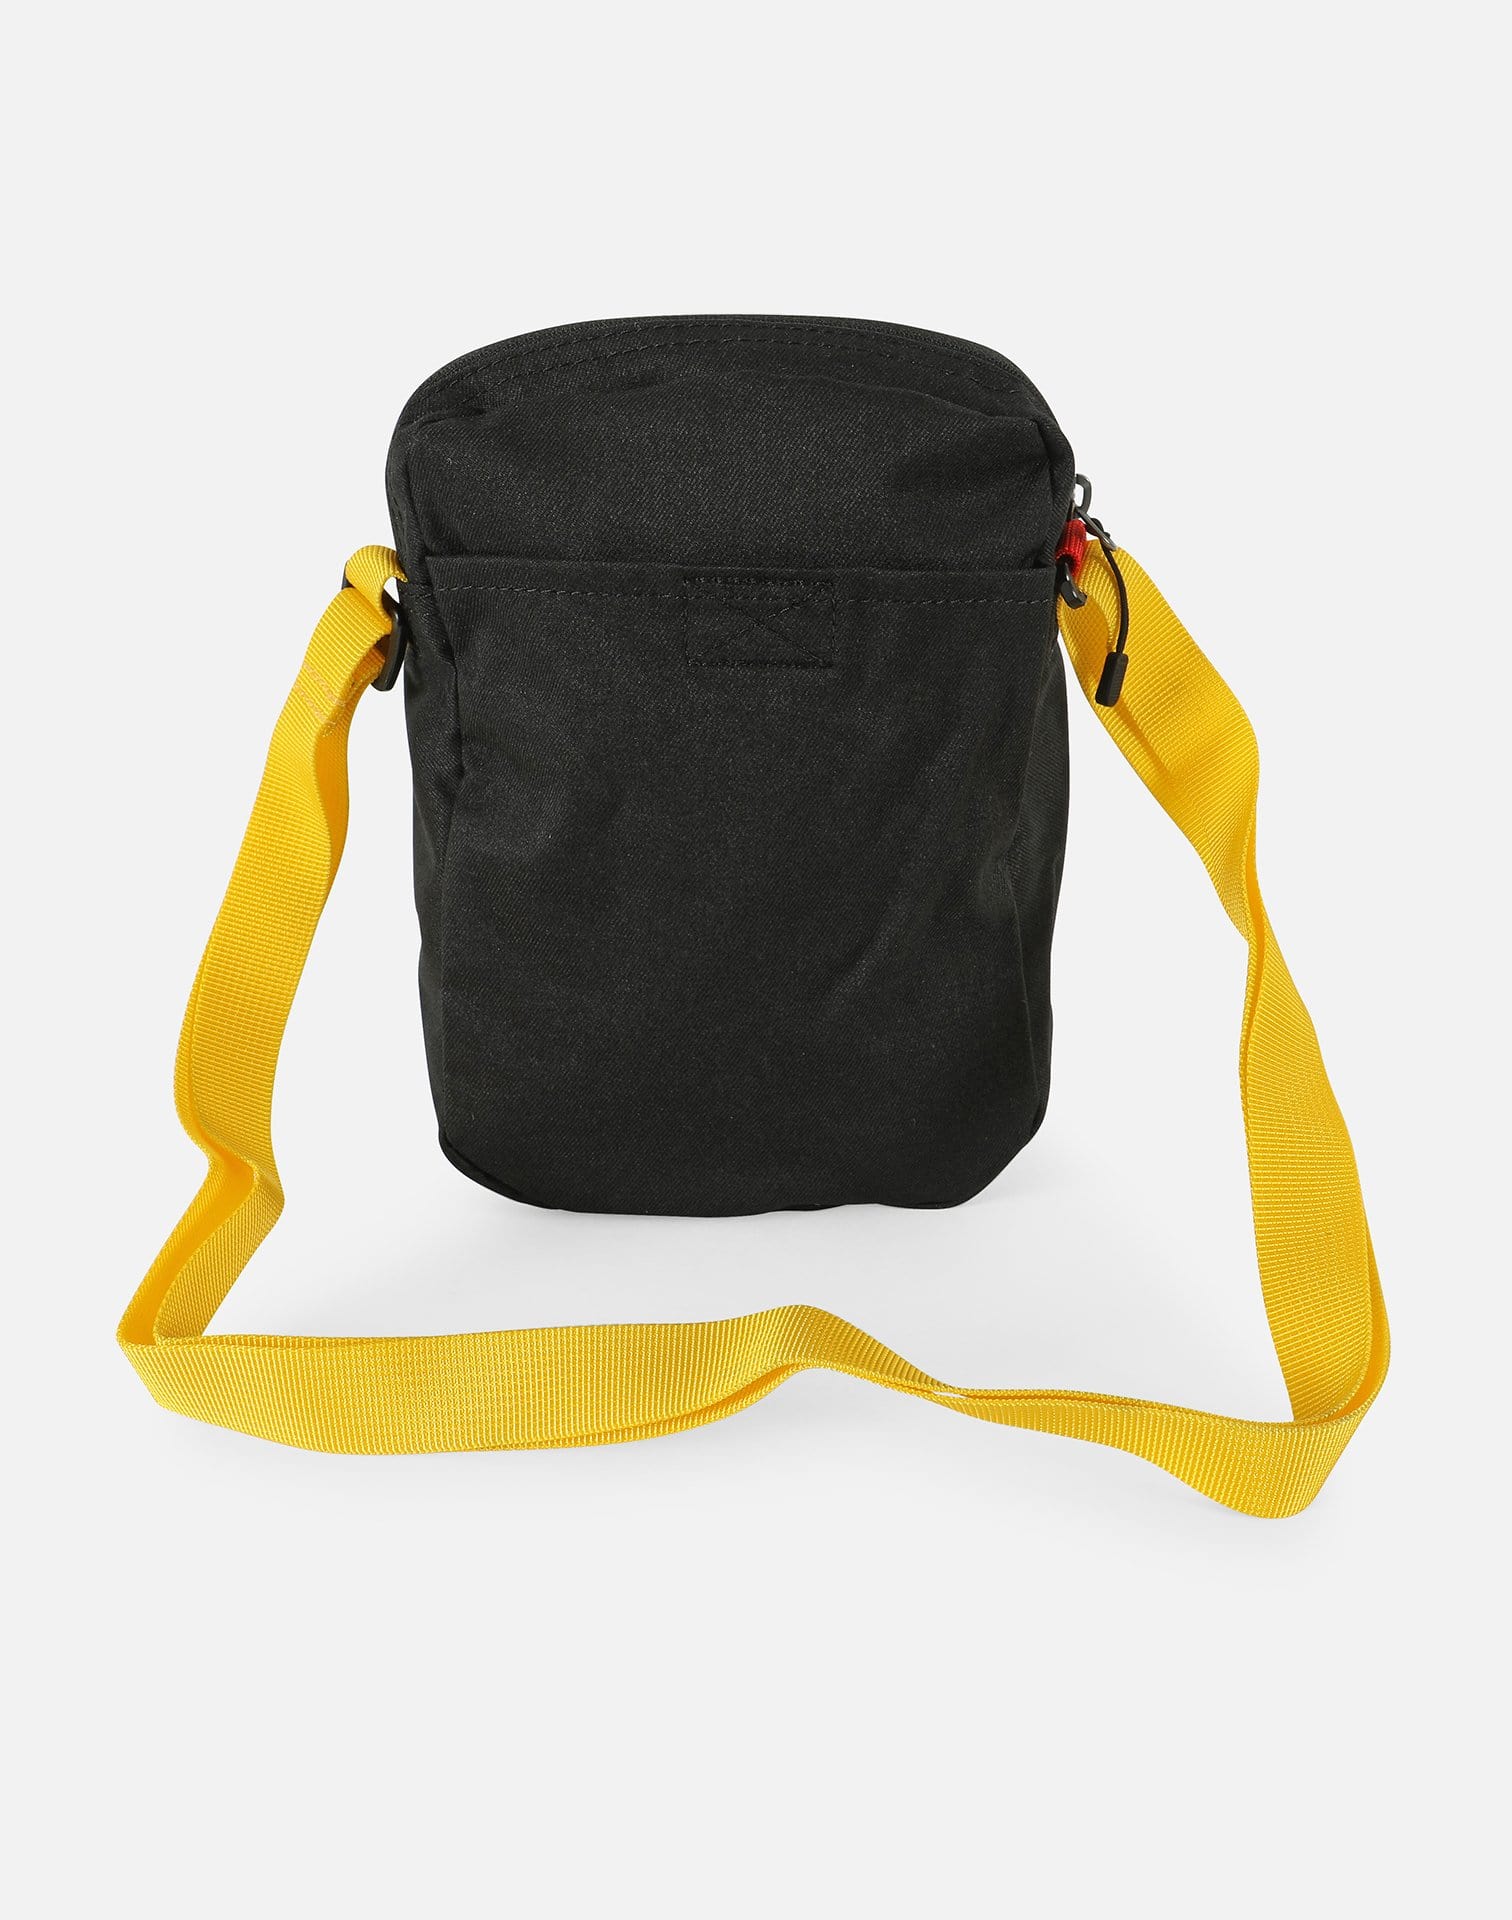 Nike Core Small Items 3.0 Bag